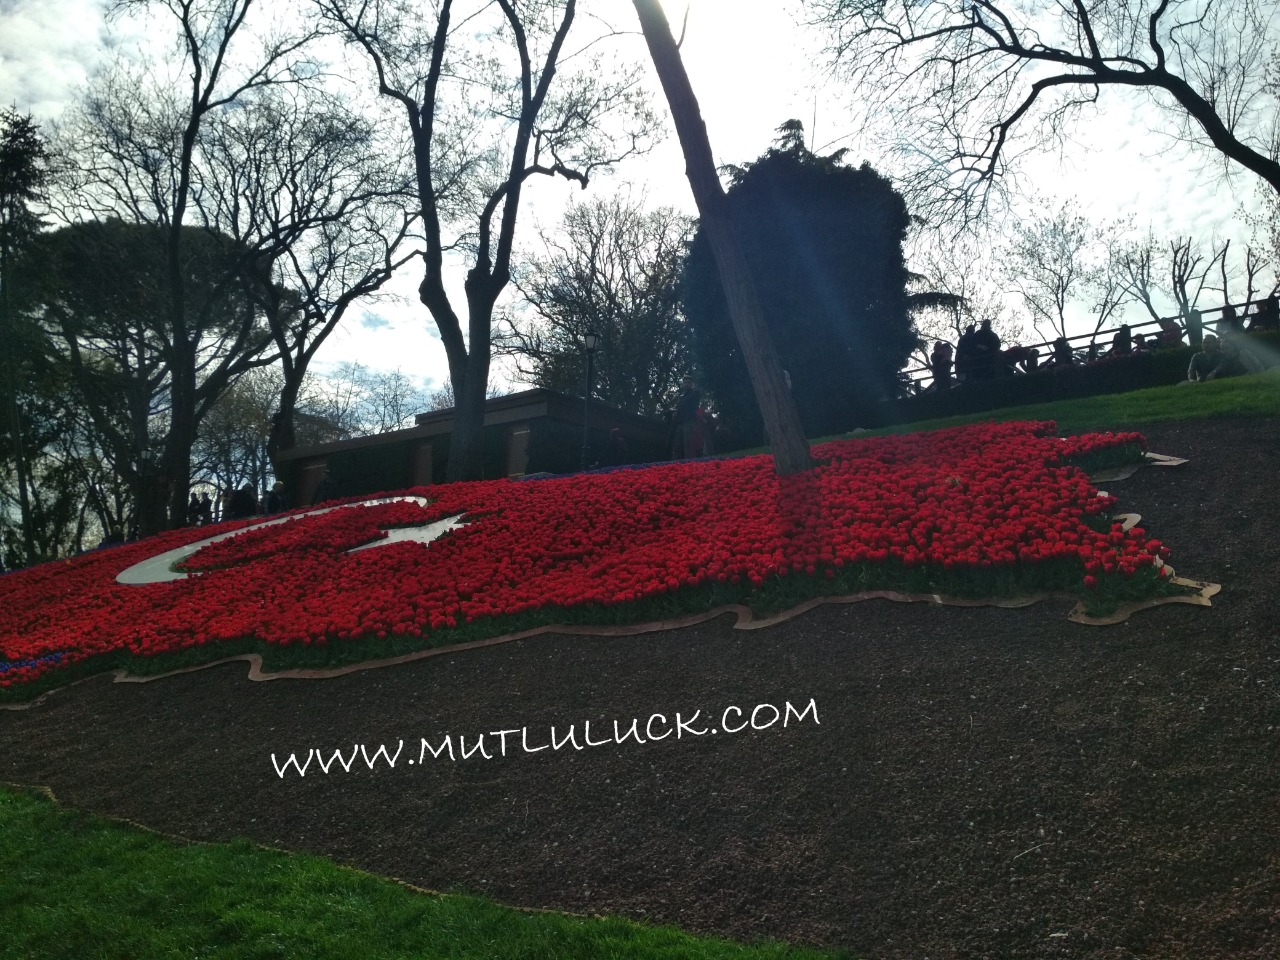 Tidak lupa bendera Turki dari bunga tulip juga terpampang jelas